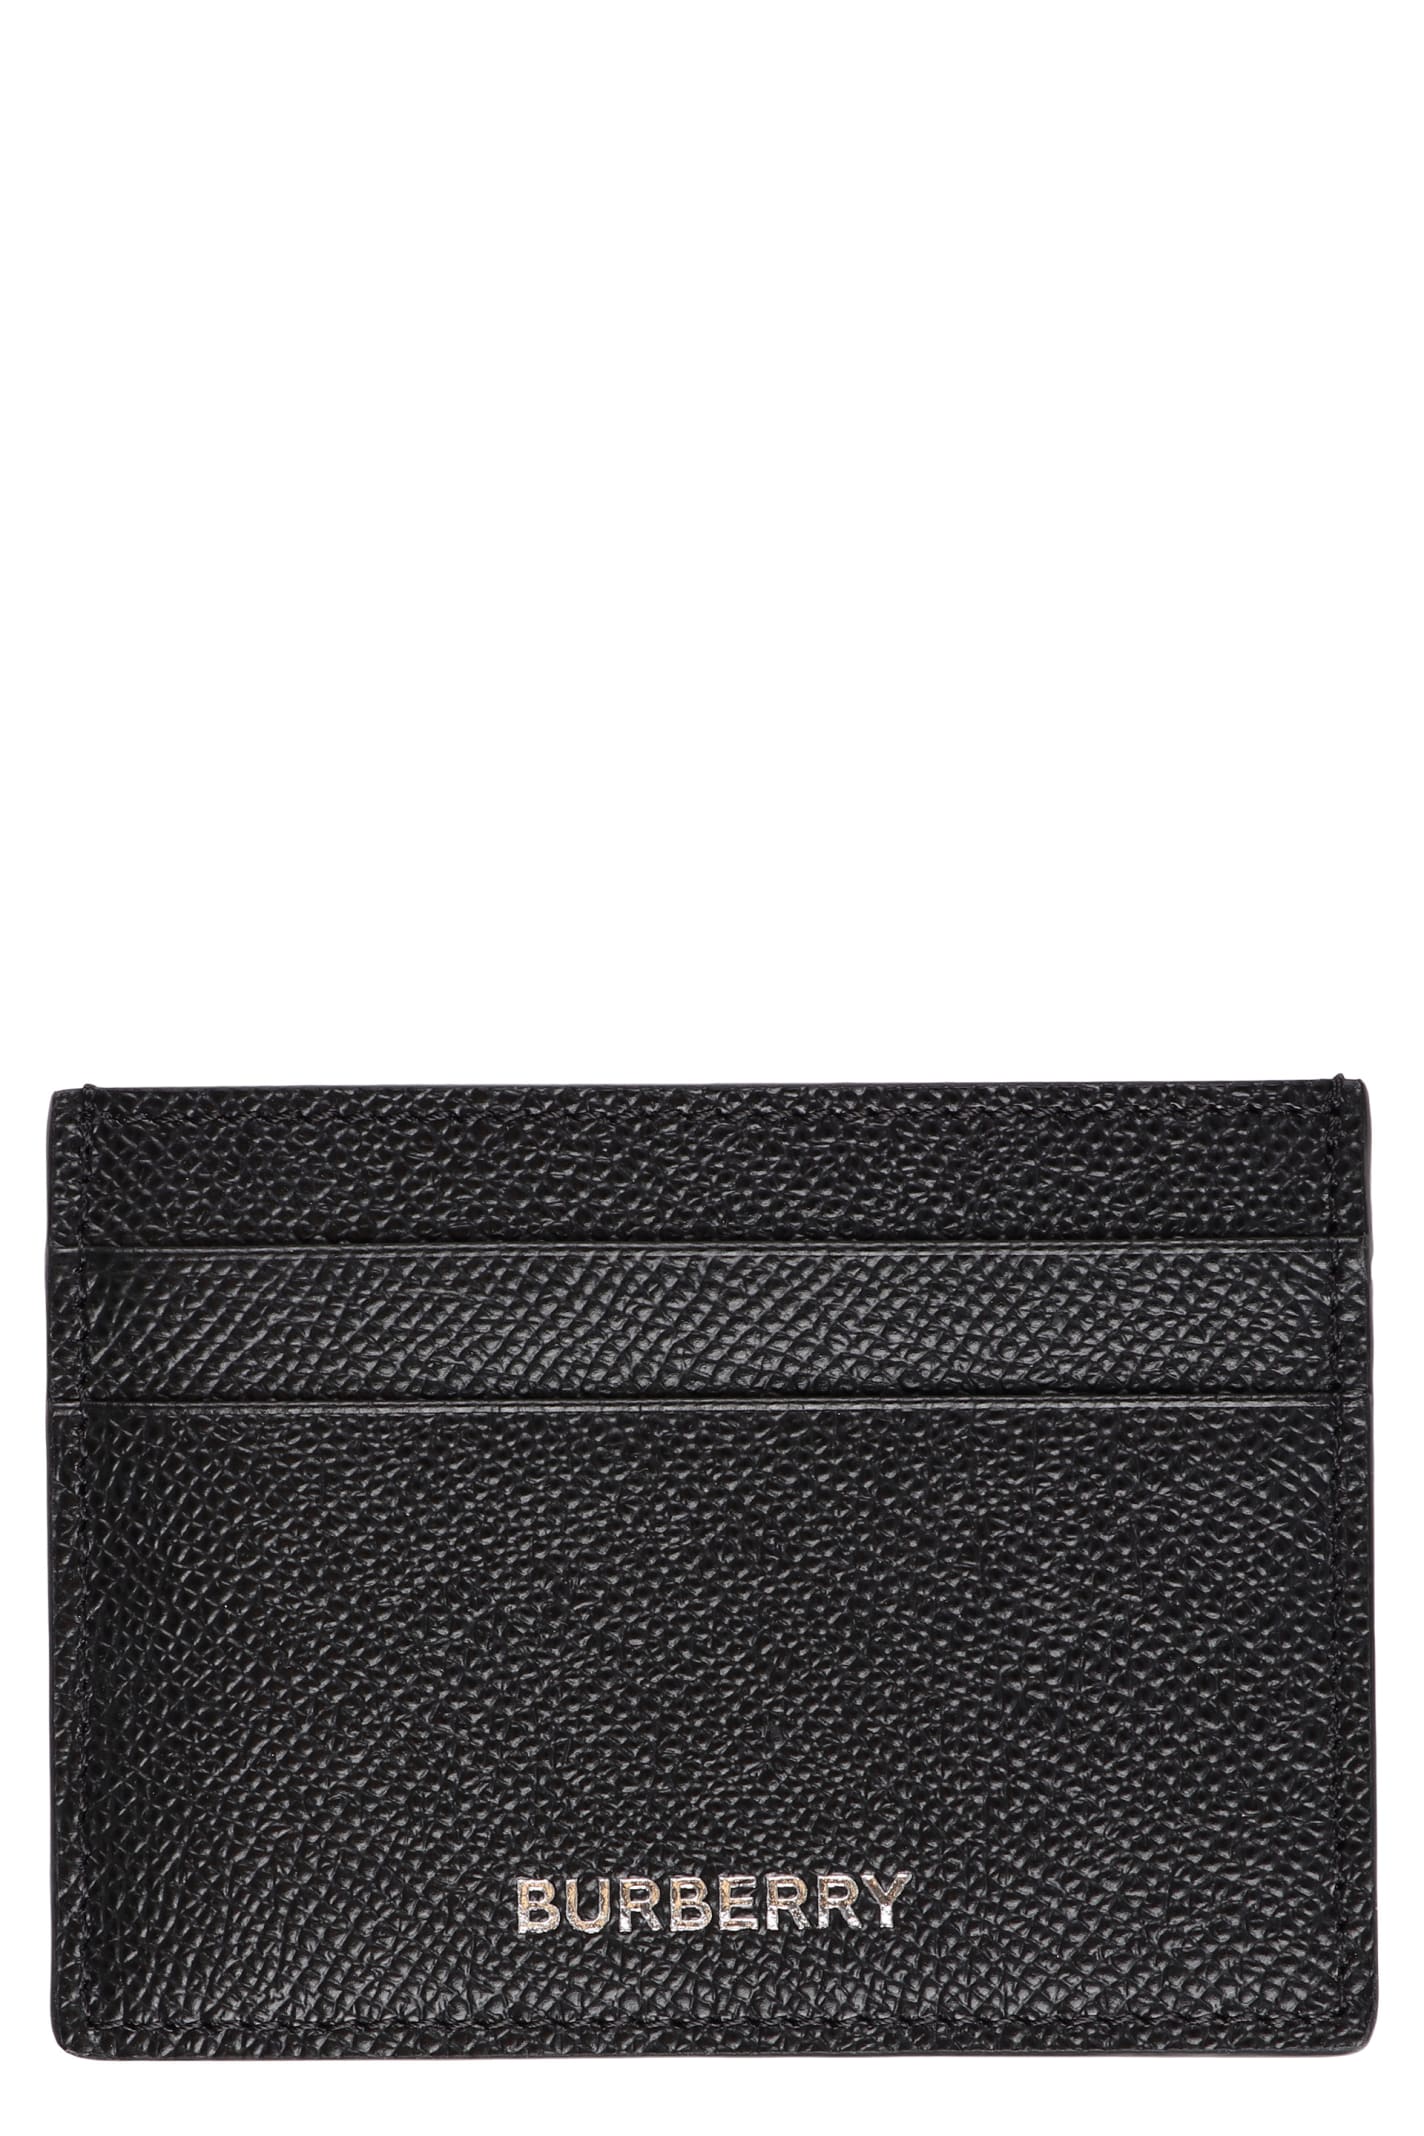 Burberry Leather Card Holder - black 